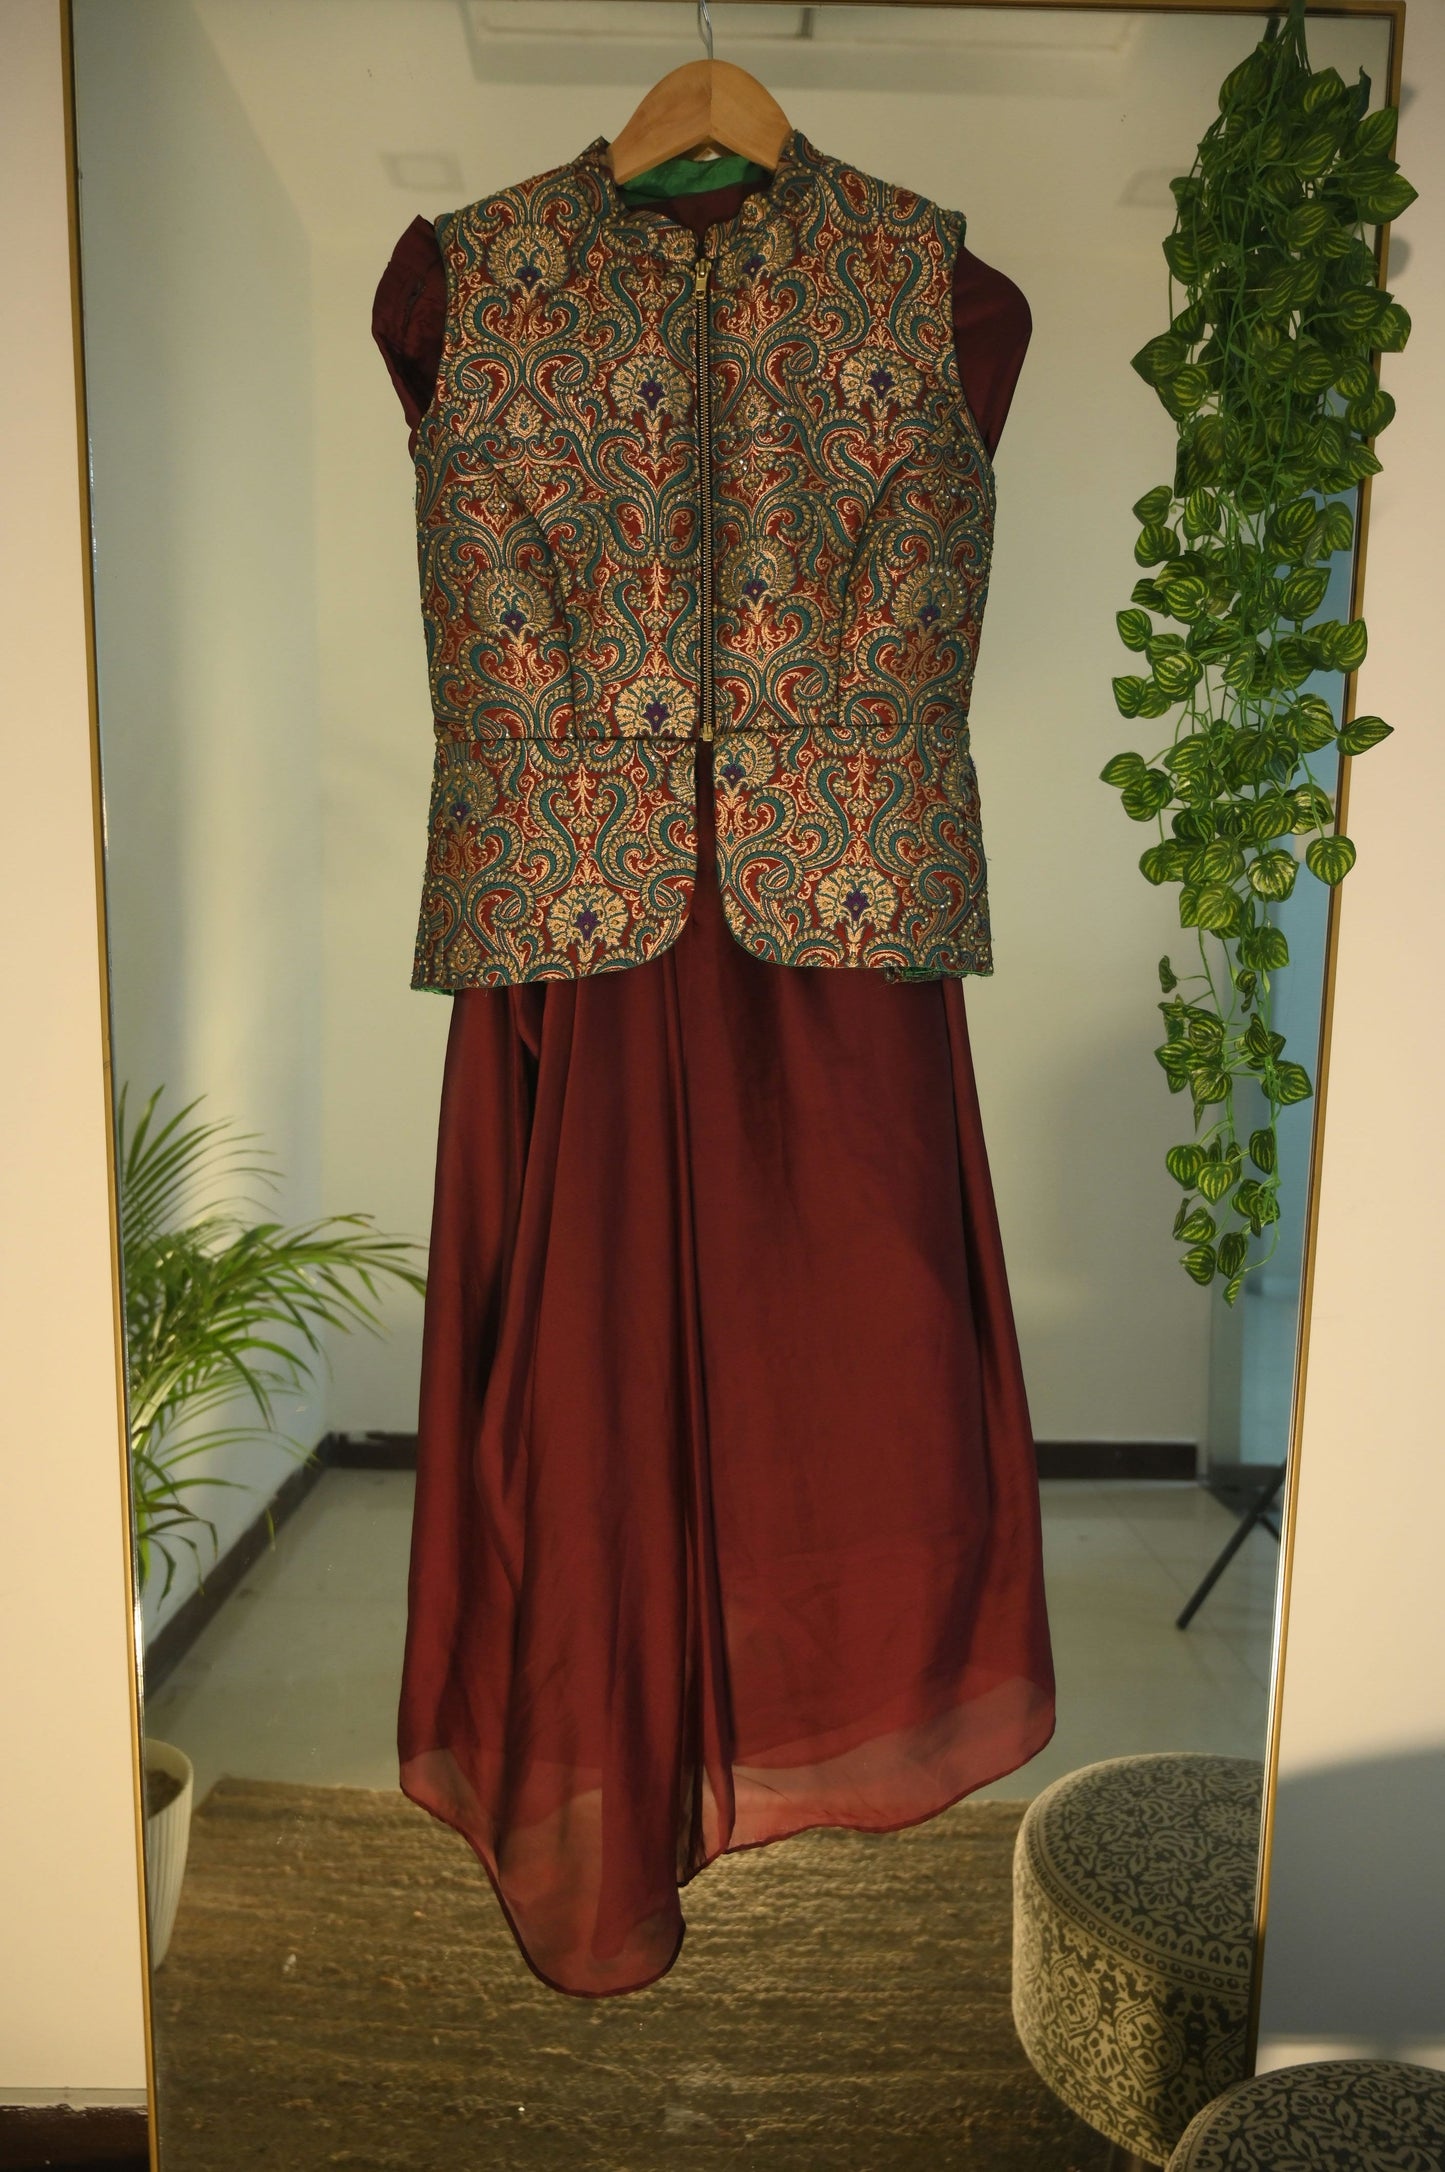 Brocade blouse with mahroon drape skirt